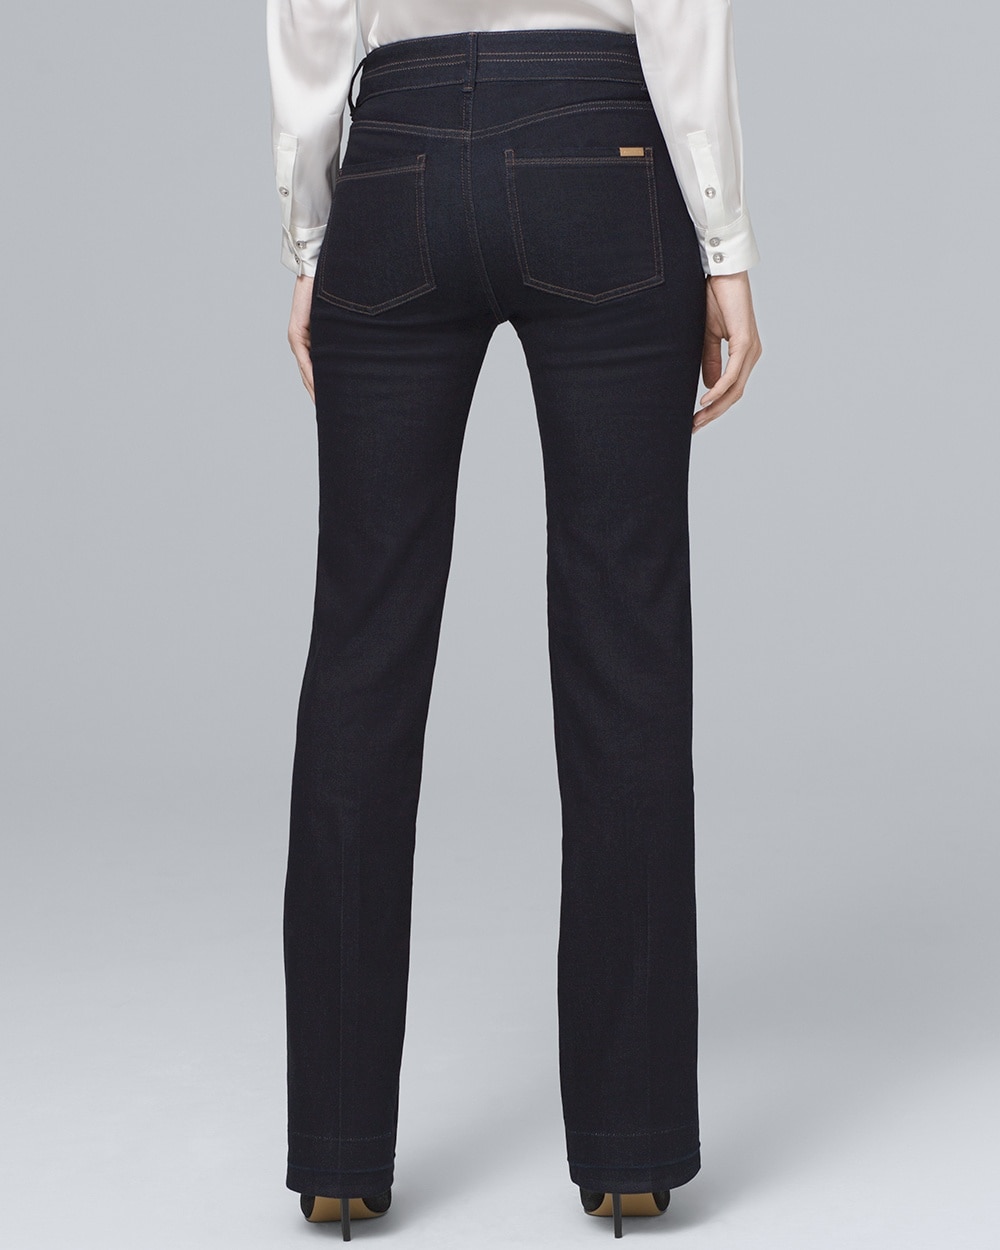 High-Rise Trouser Jeans - White House Black Market